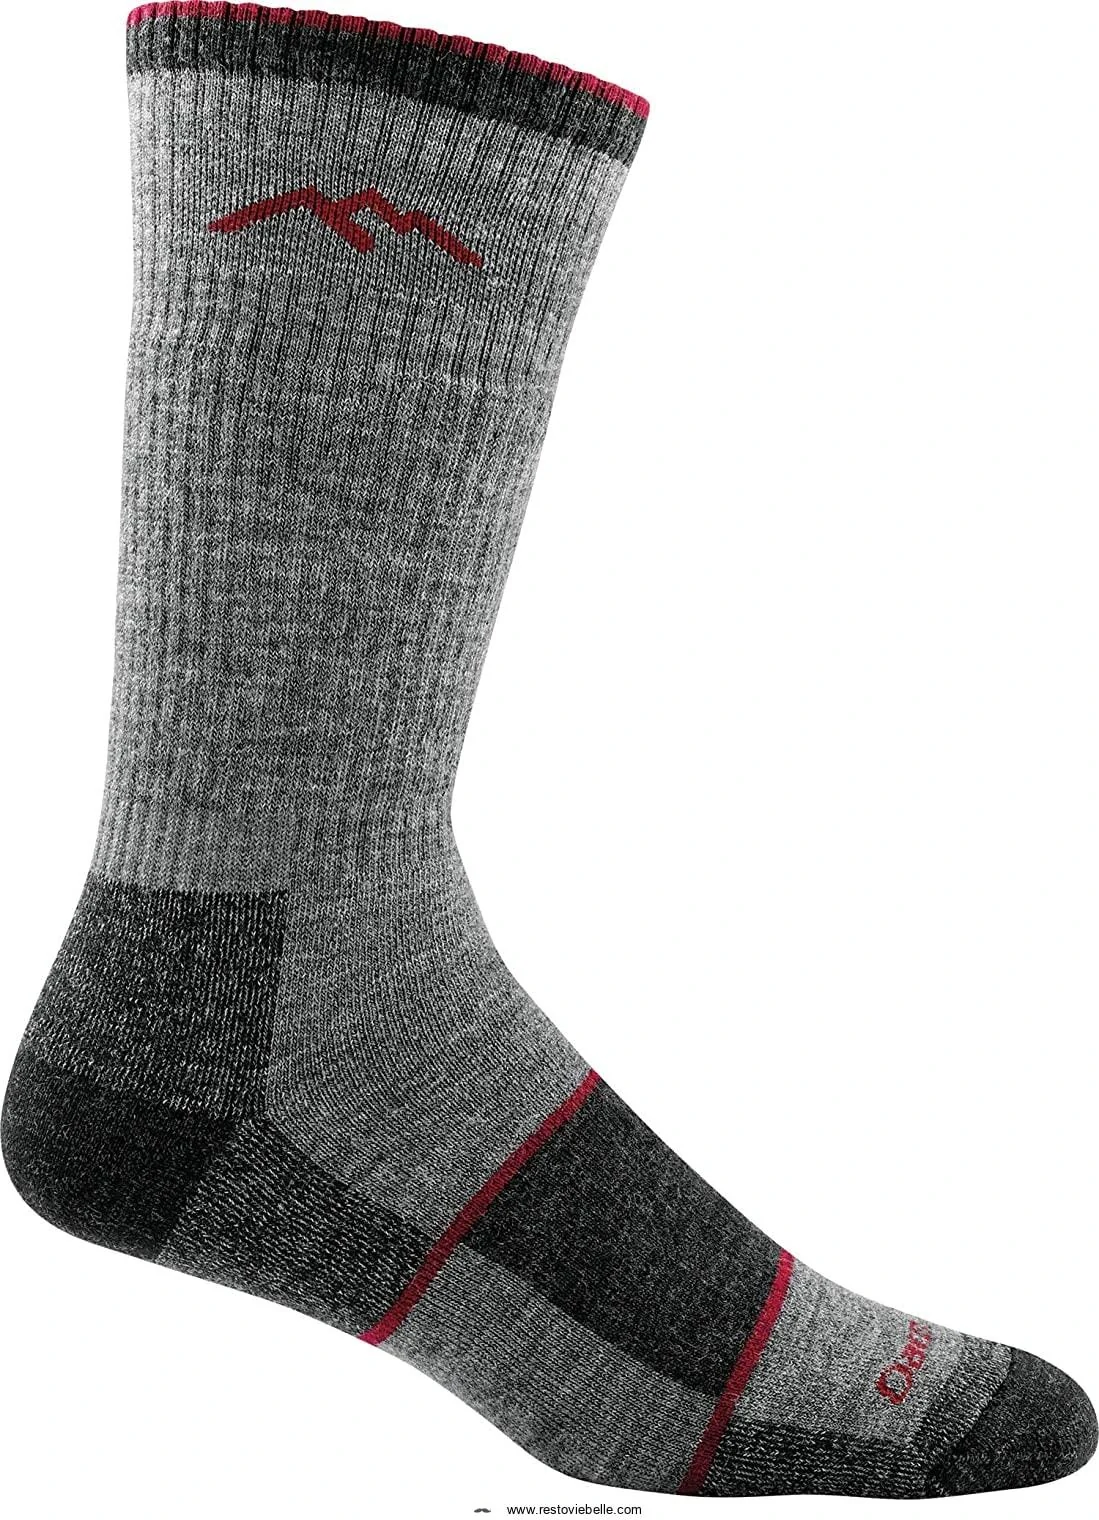 Darn Tough Merino Wool Hiker Socks